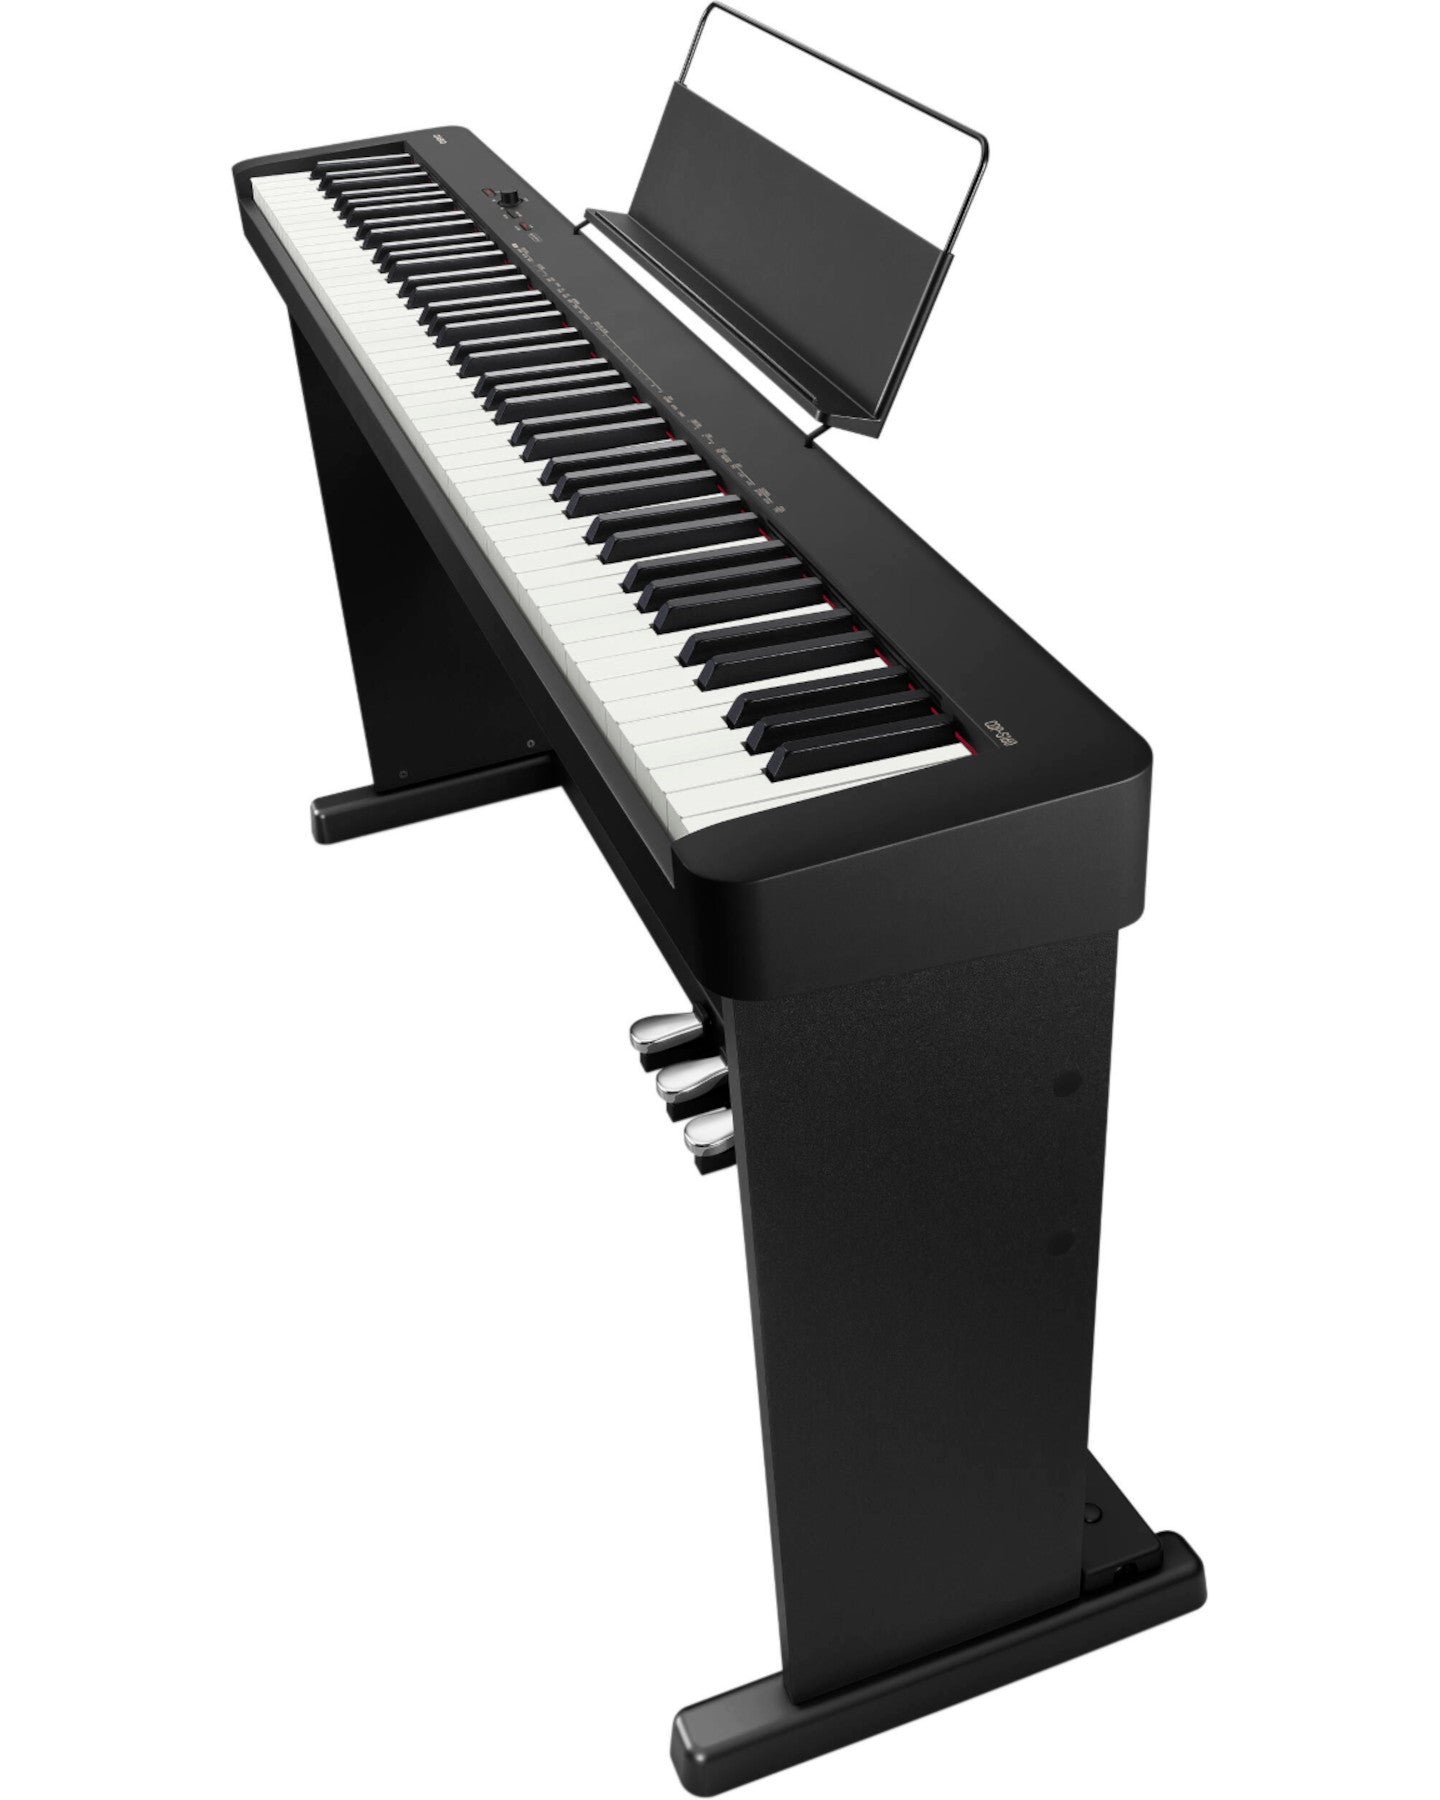 CDP-S160-BK 88-Key Digital Piano